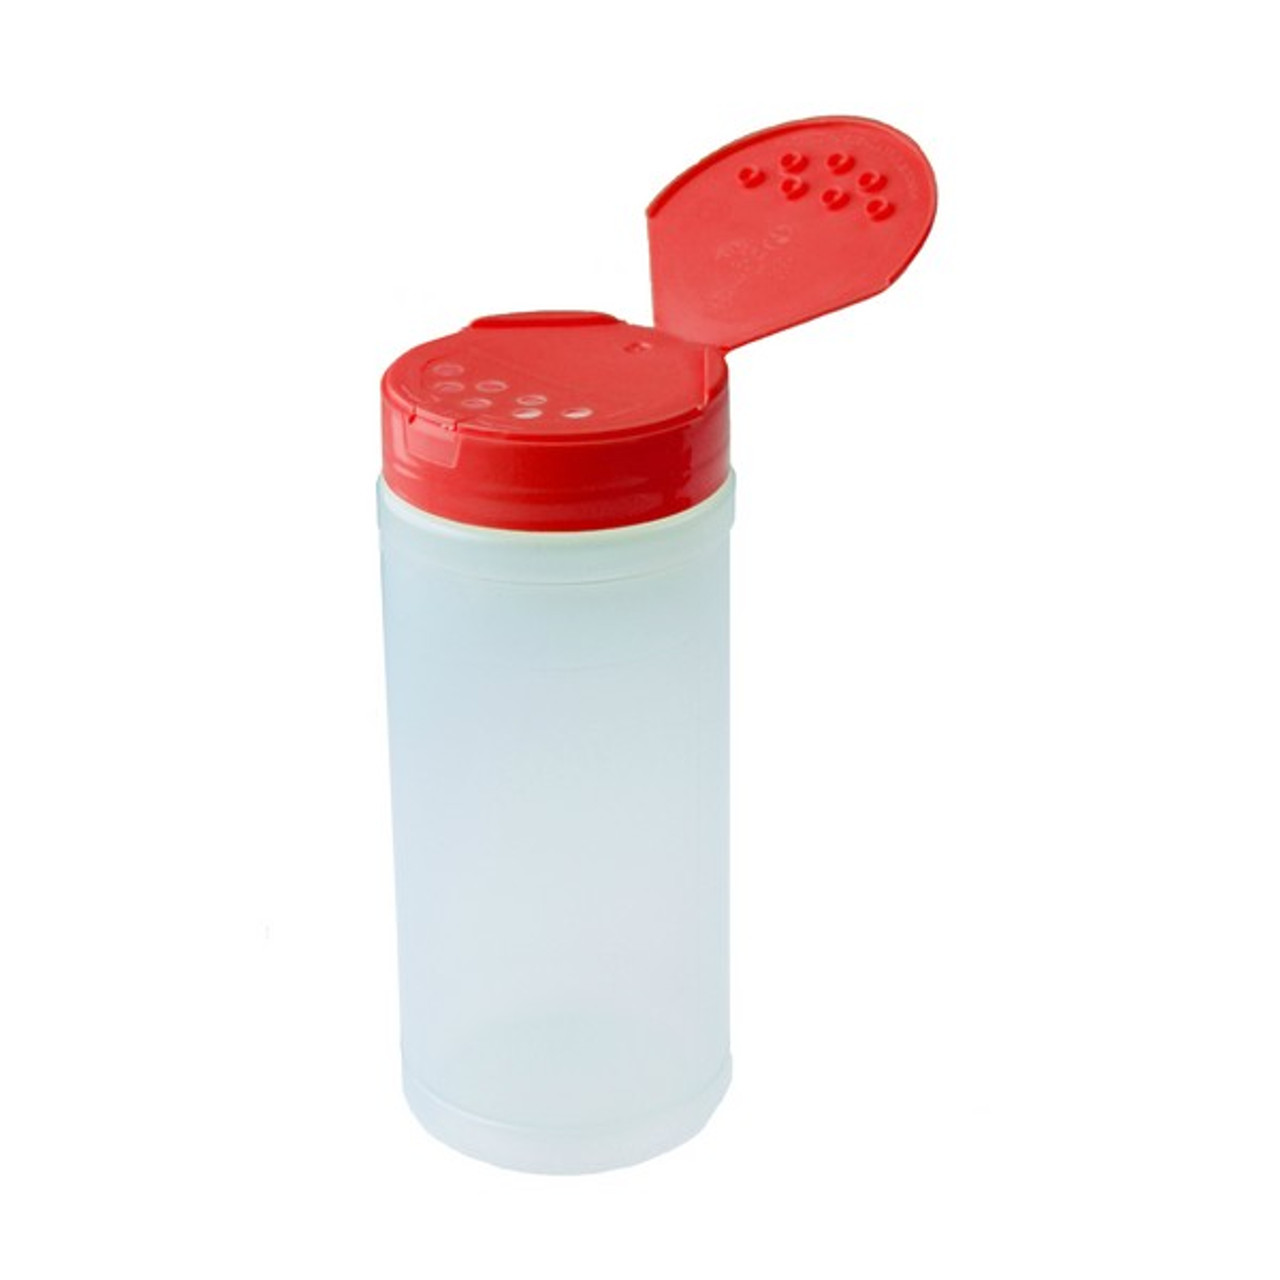 Plastic Spice Jars - 8 oz, Unlined